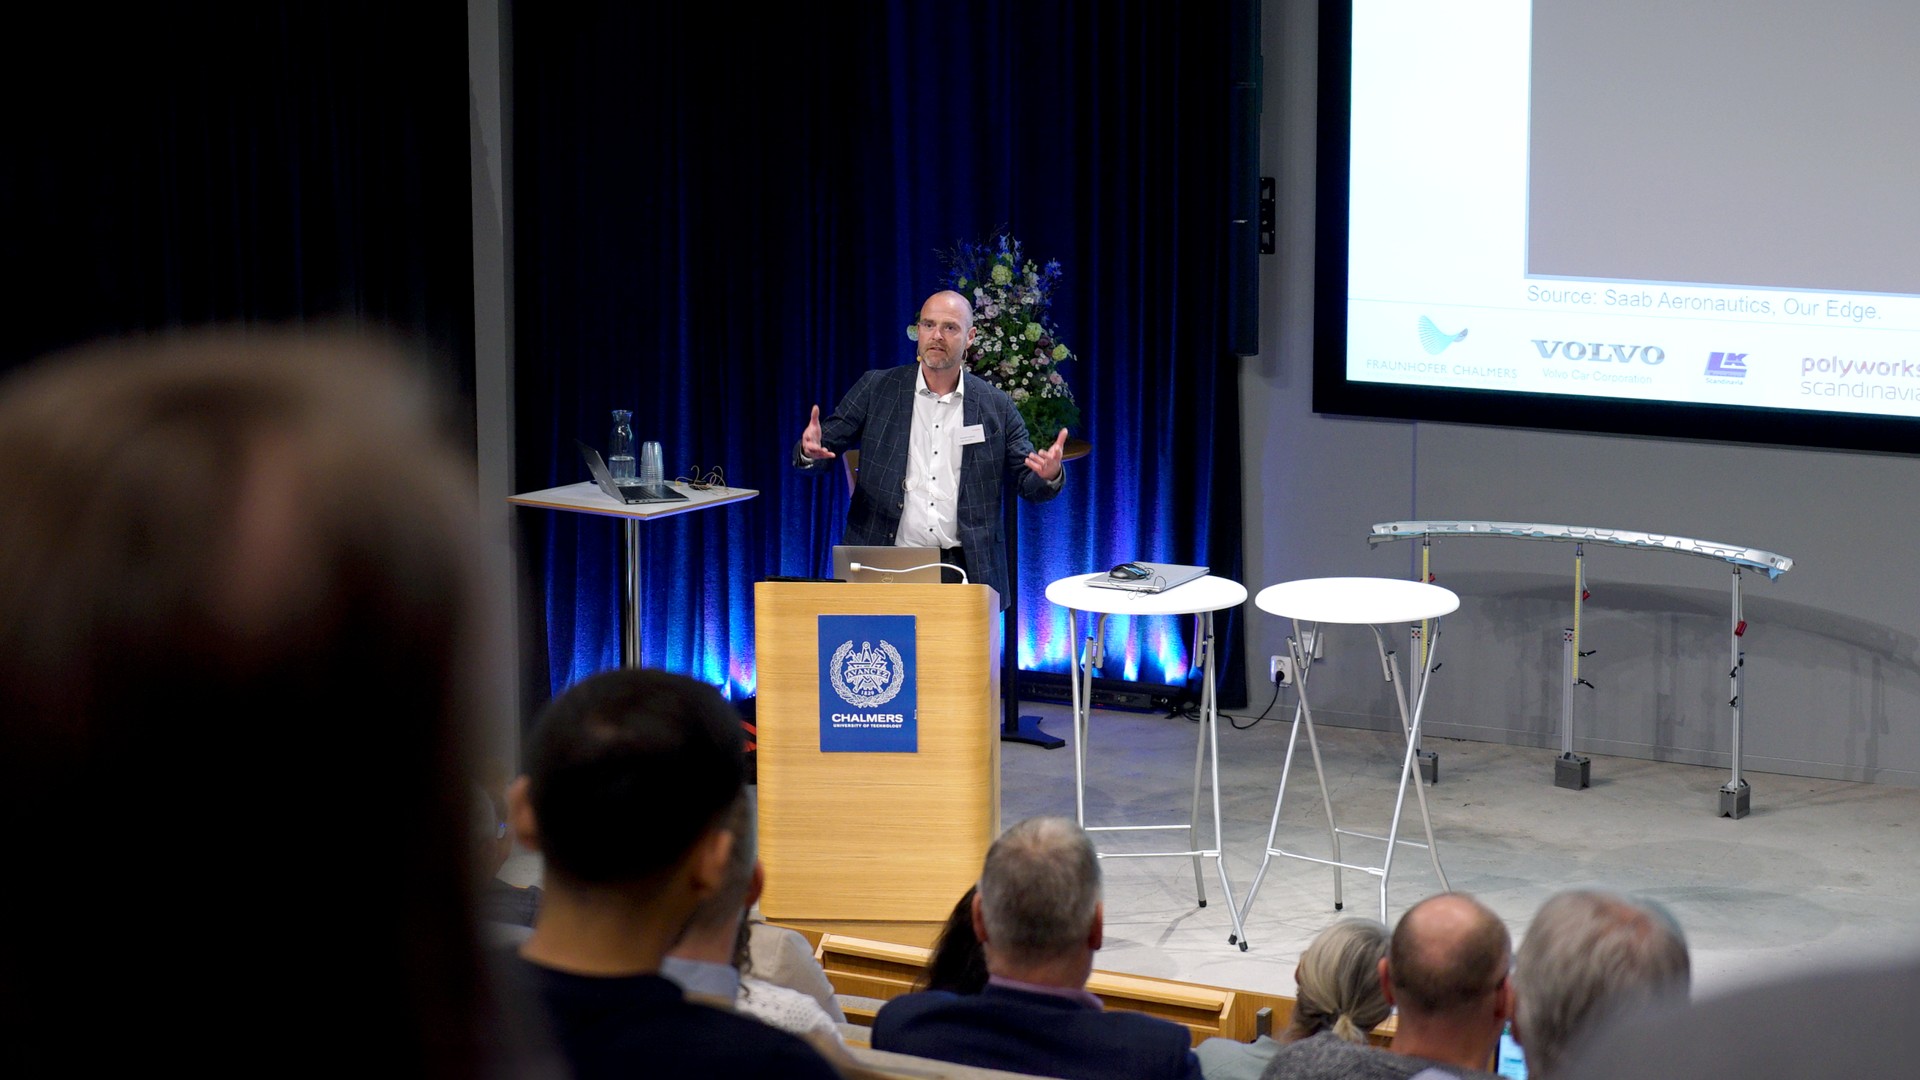 Richard Lindqvist presenting at the seminar.